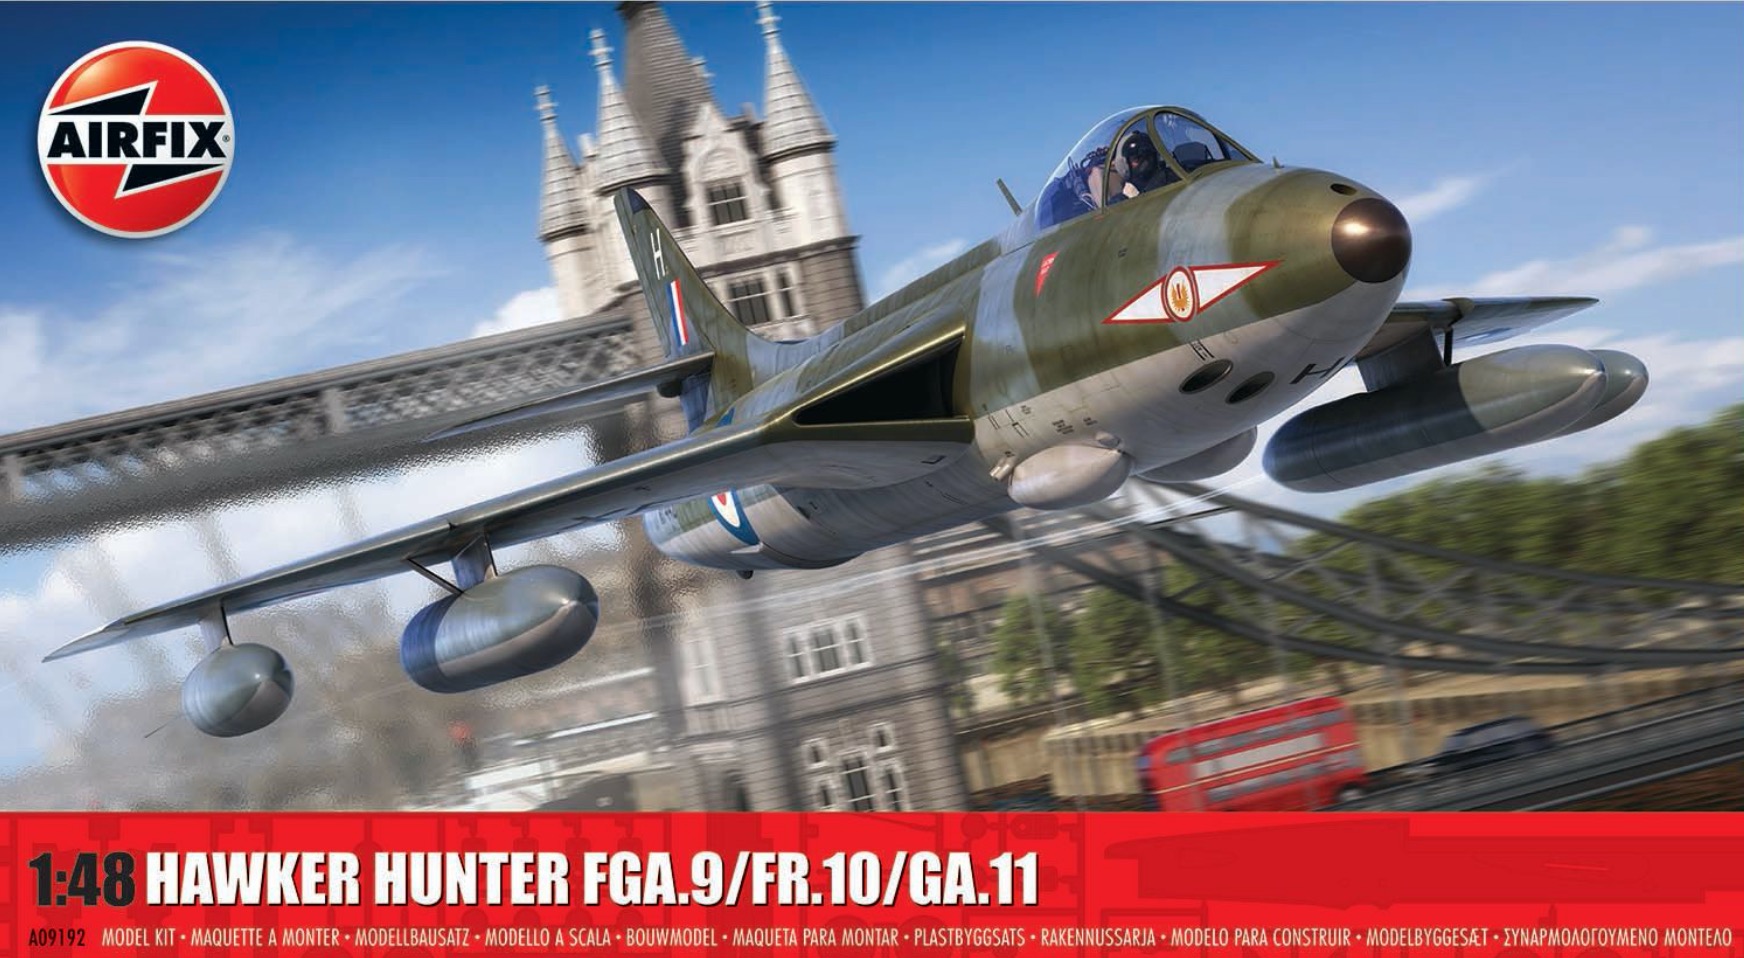 Model kit 1/48 Hawker Hunter FGA.9/FR.10/GA.11 (Airfix)